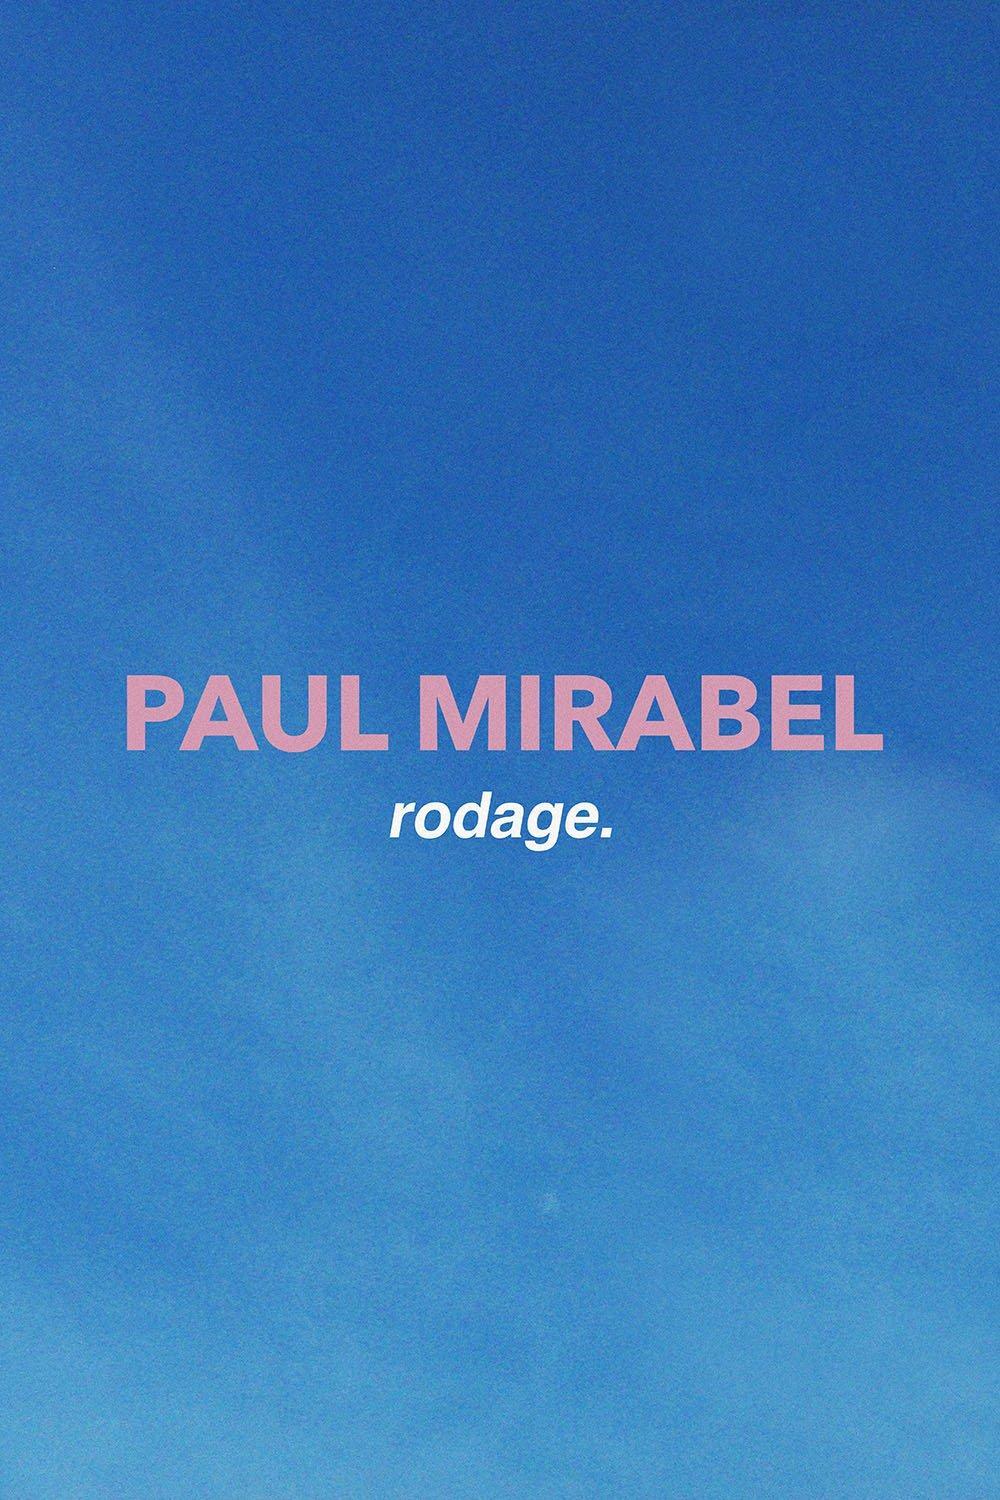 Paul Mirabel - Royal Comedy Club - Reims (51)